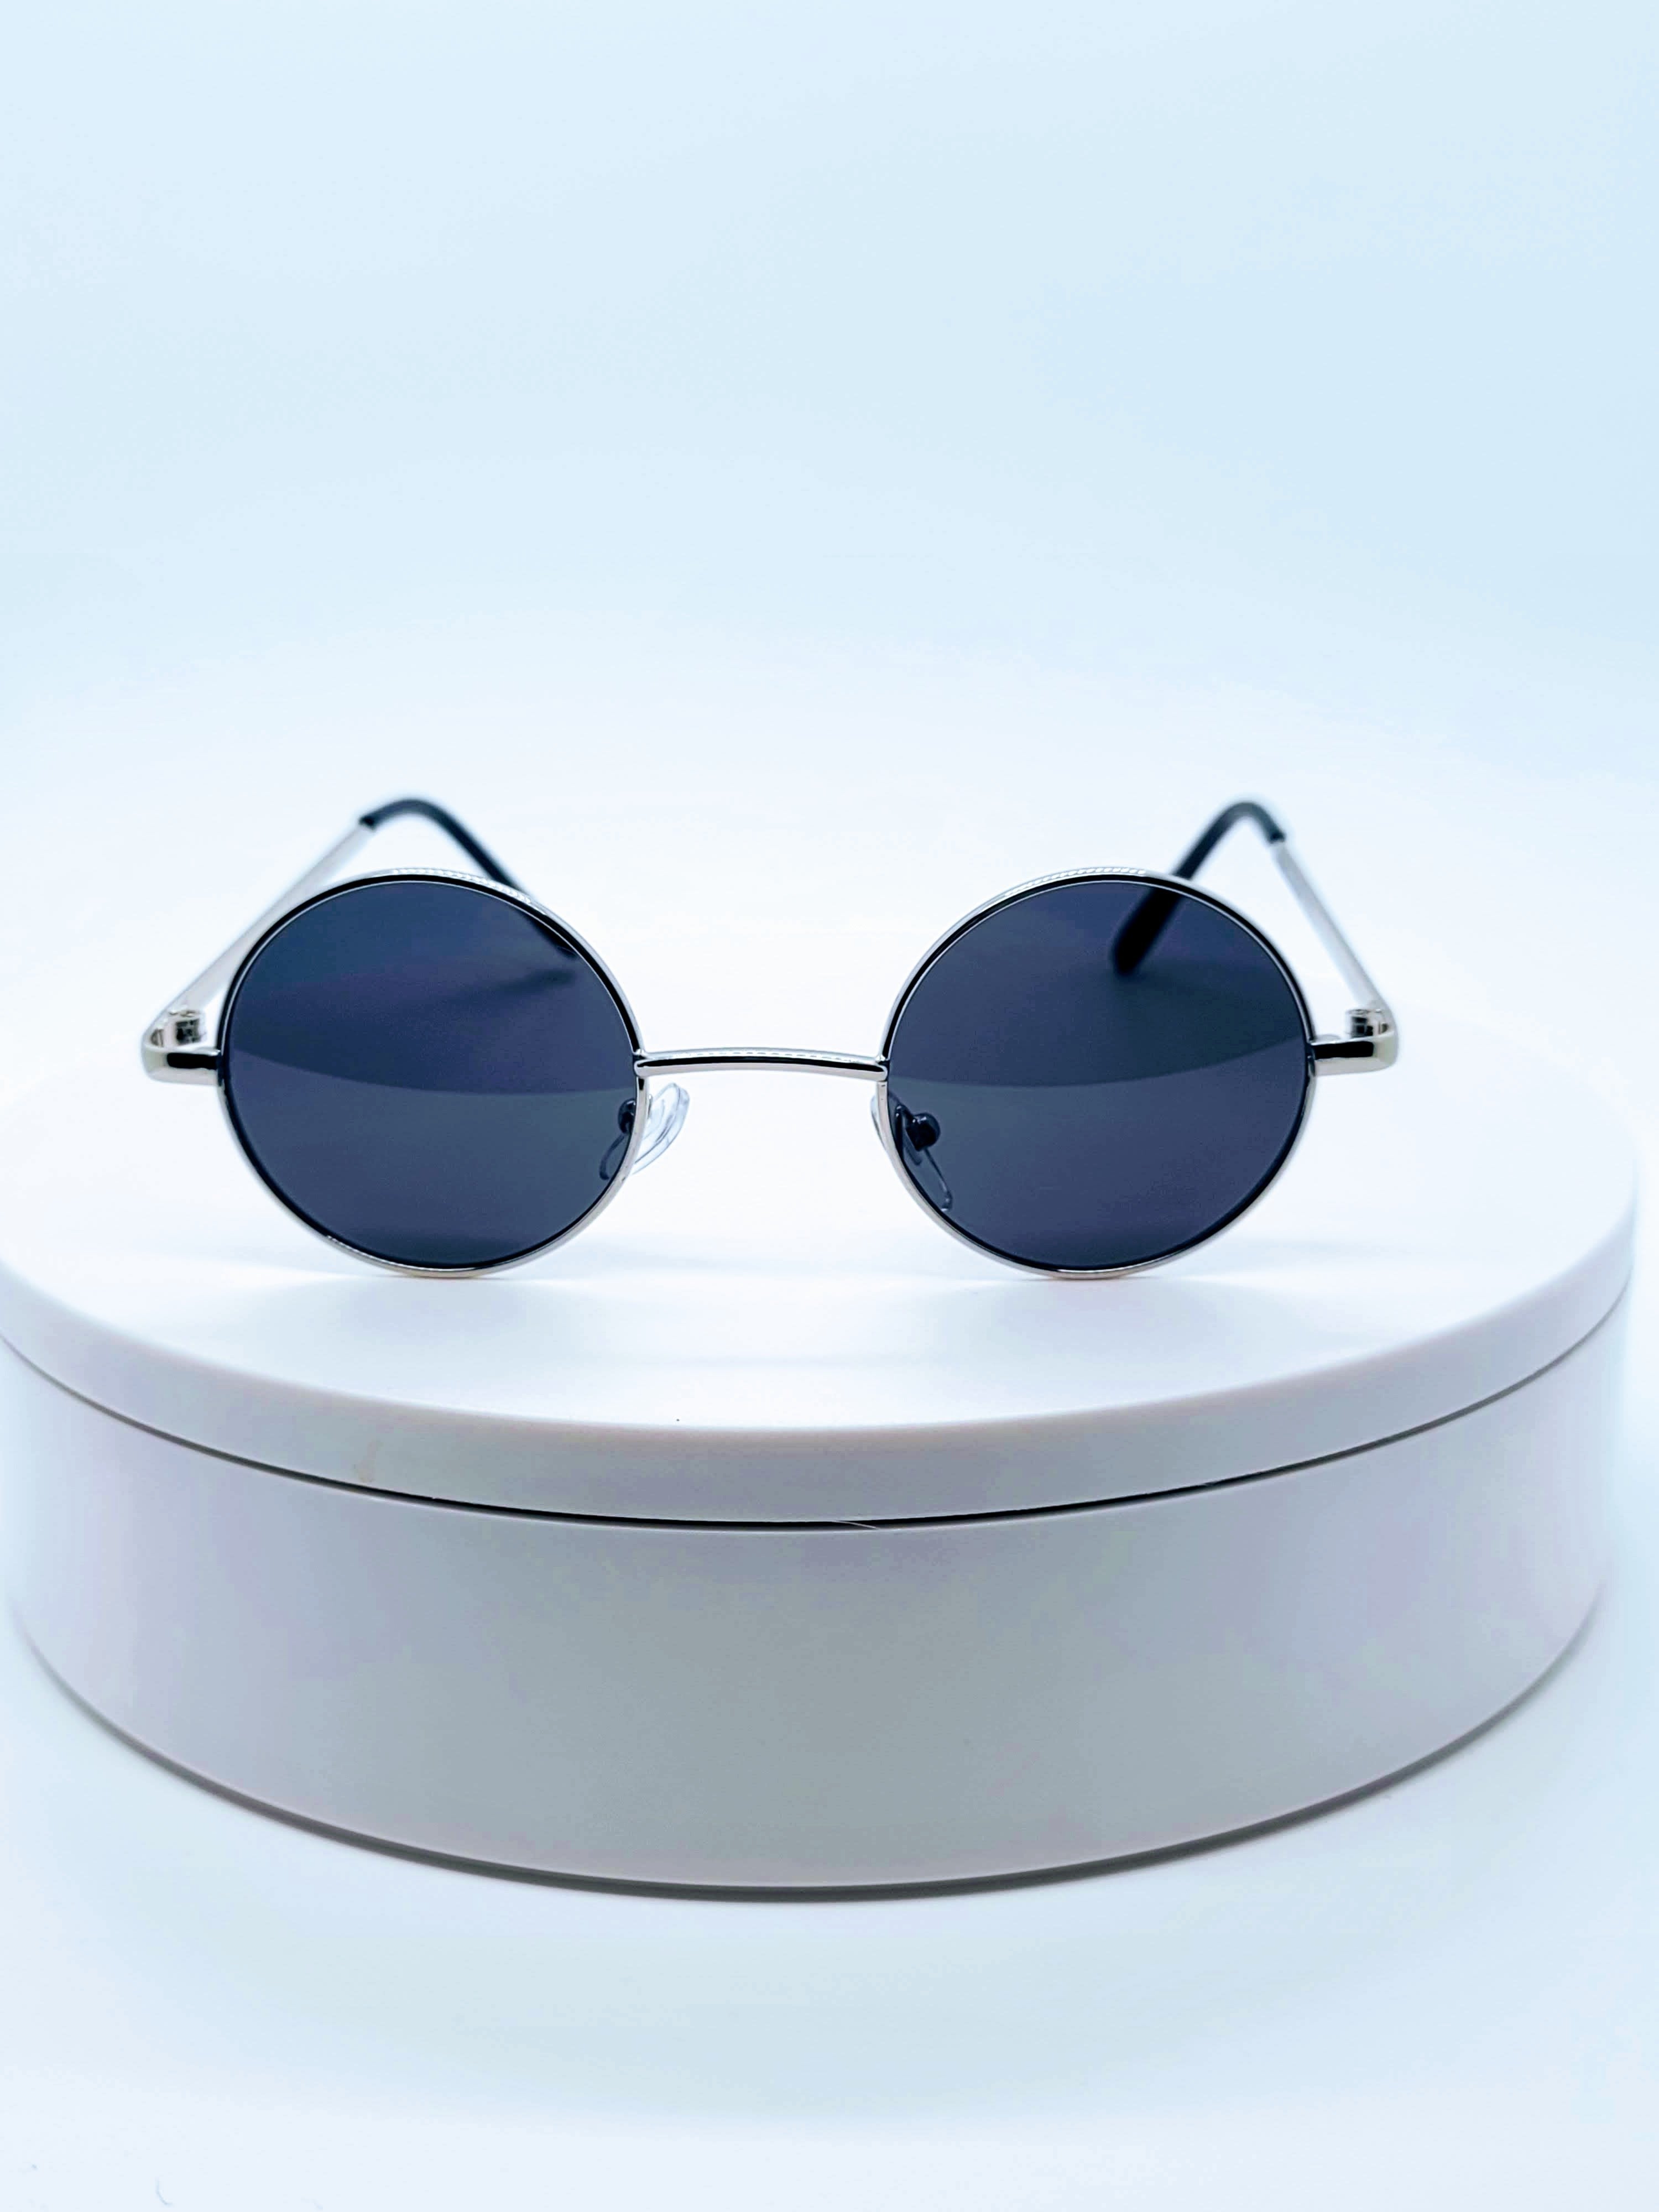 Sunglasses-For Men-And-Women's